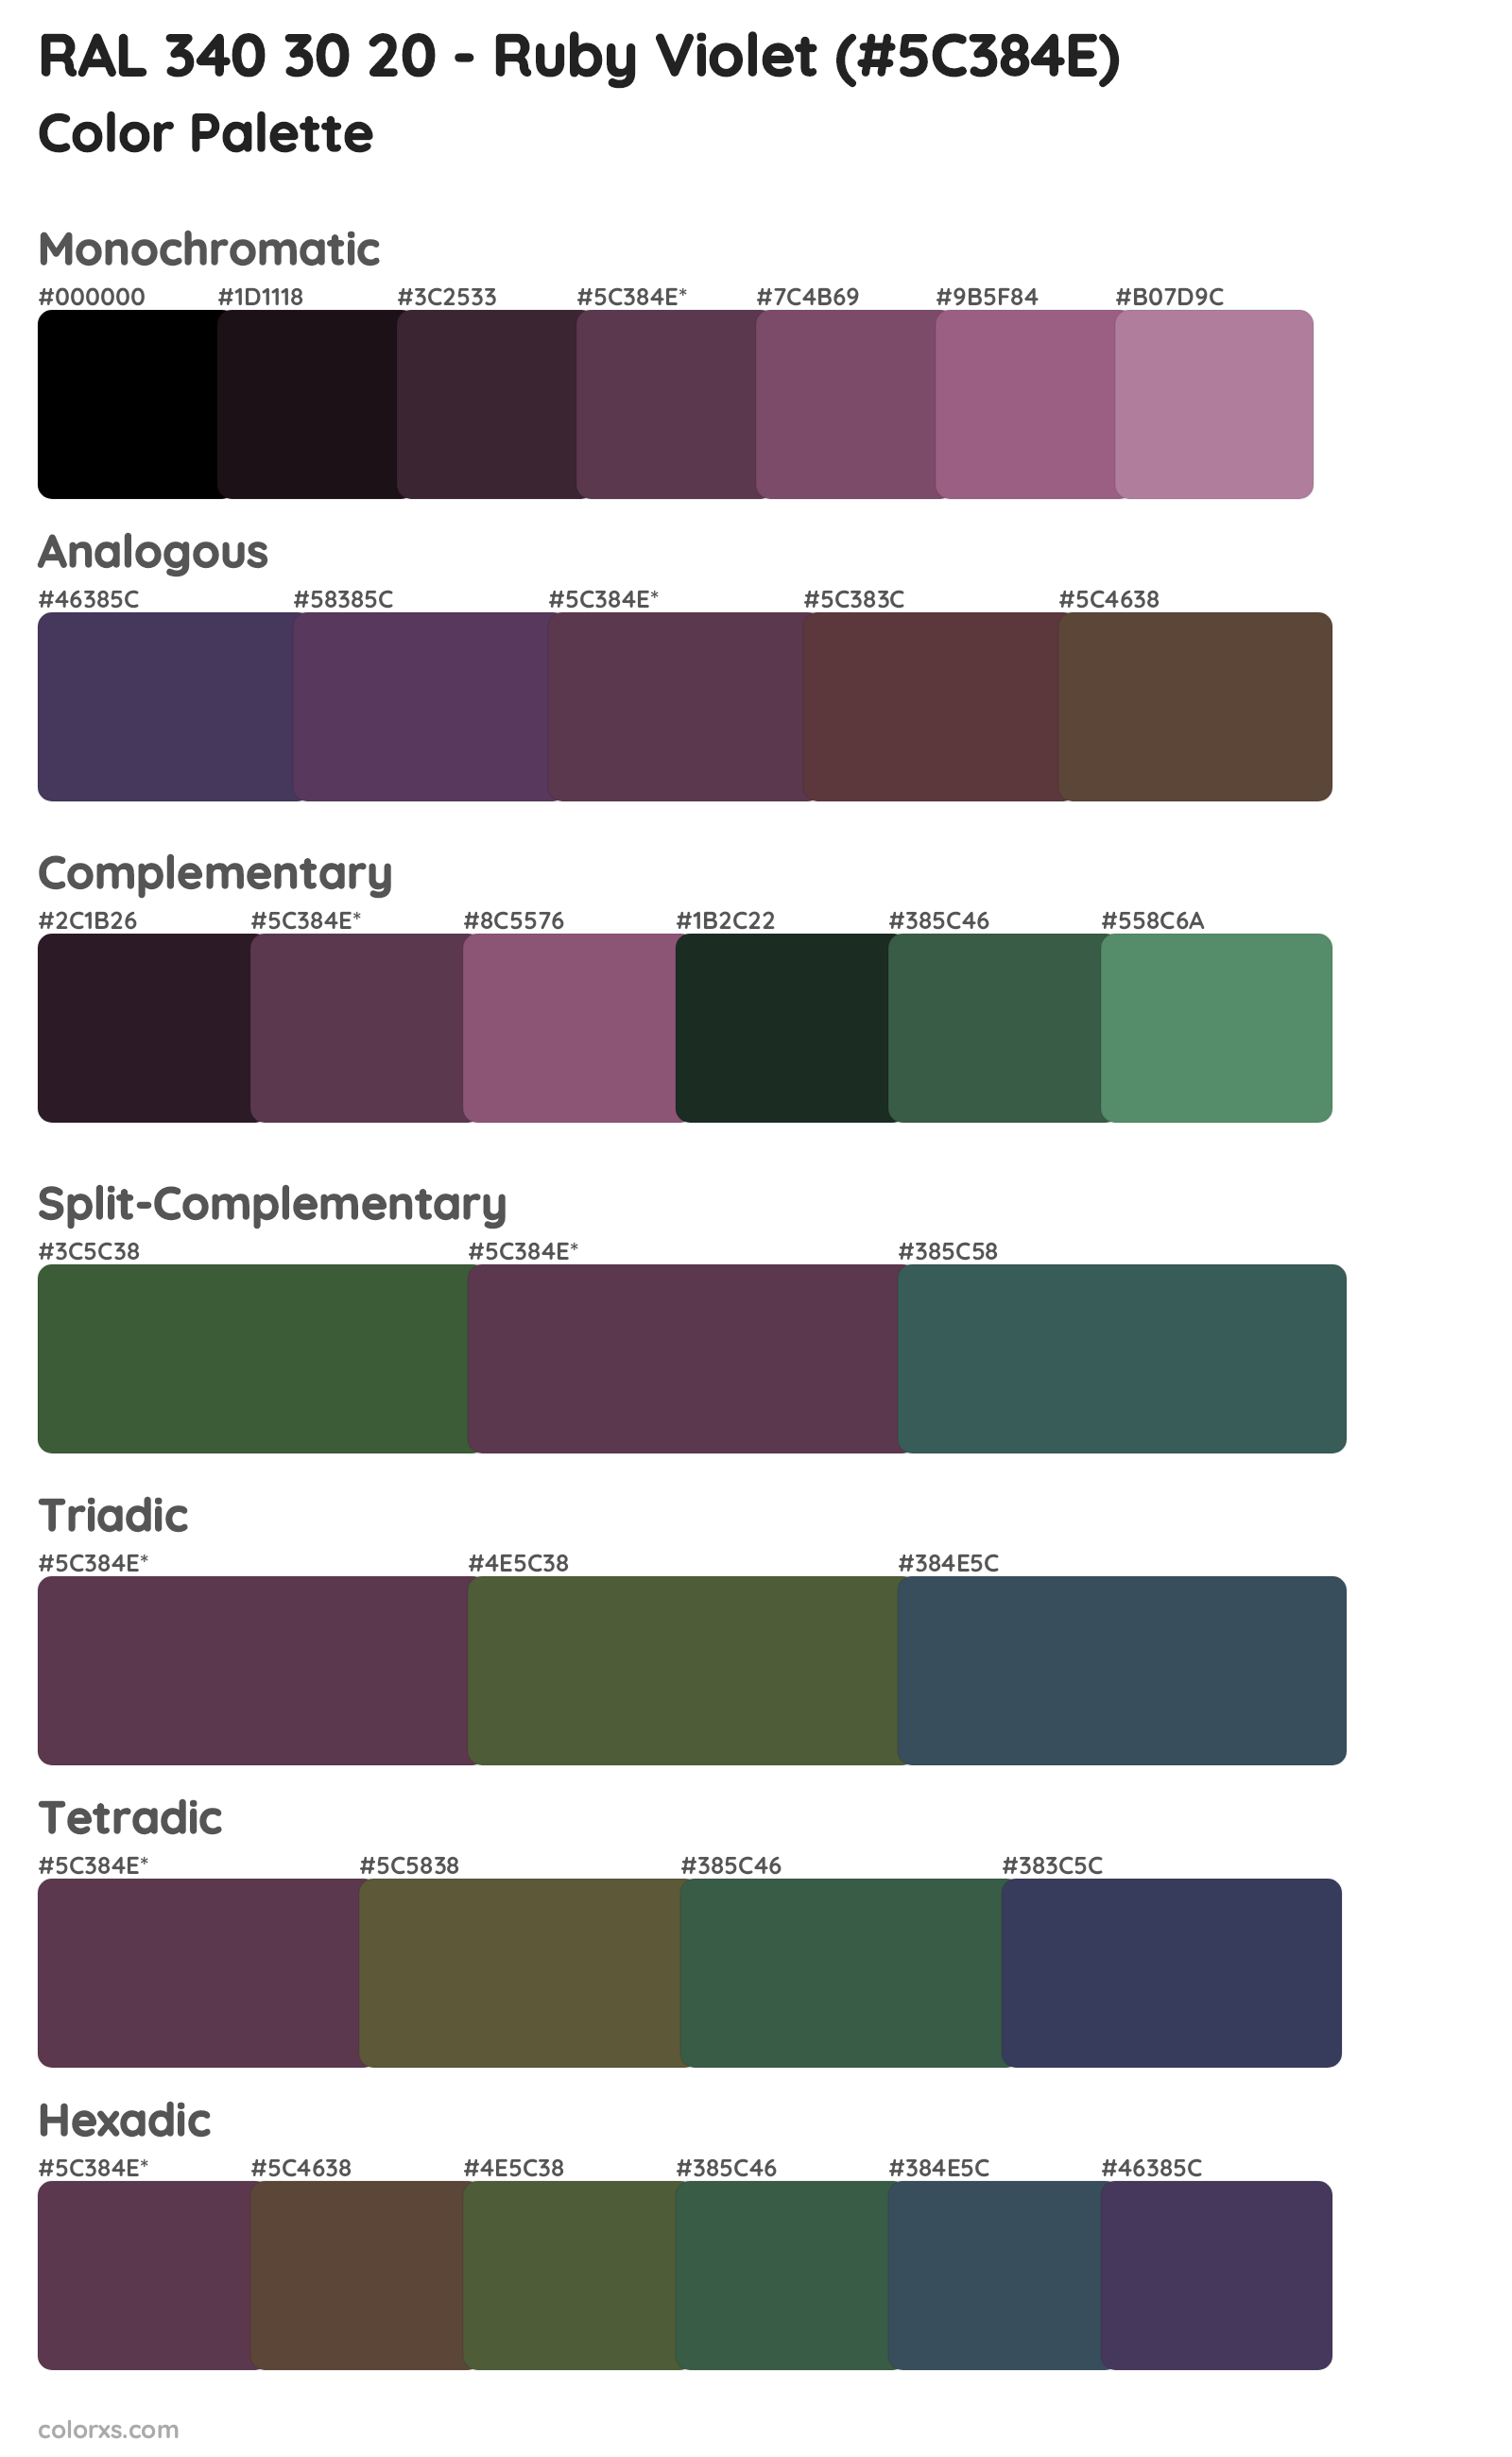 RAL 340 30 20 - Ruby Violet Color Scheme Palettes